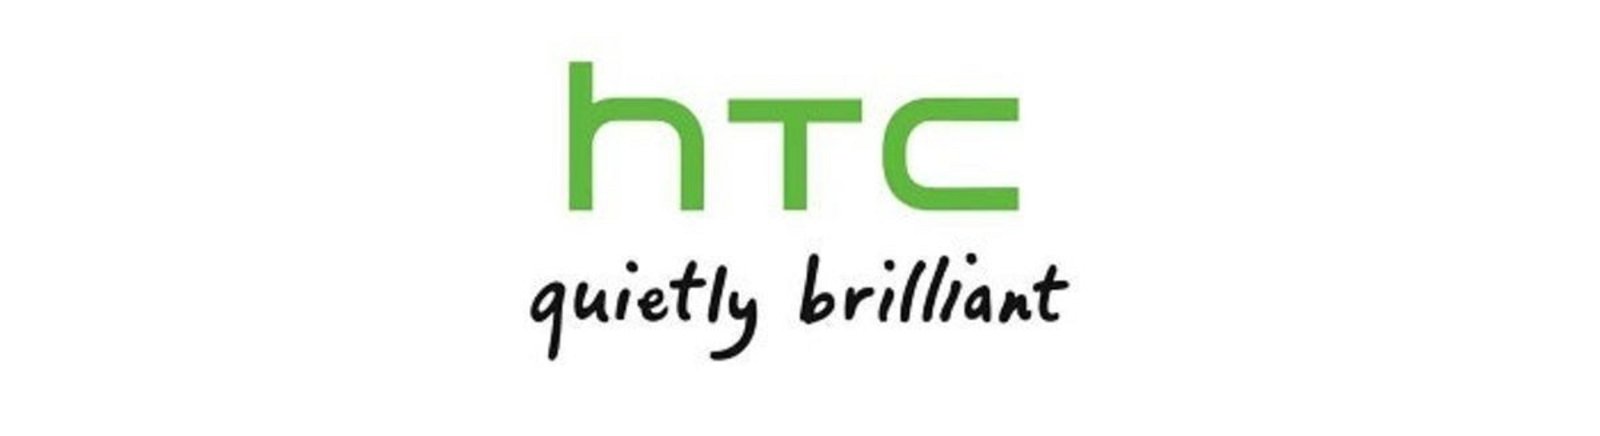 Logo de la firma taiwanesa HTC